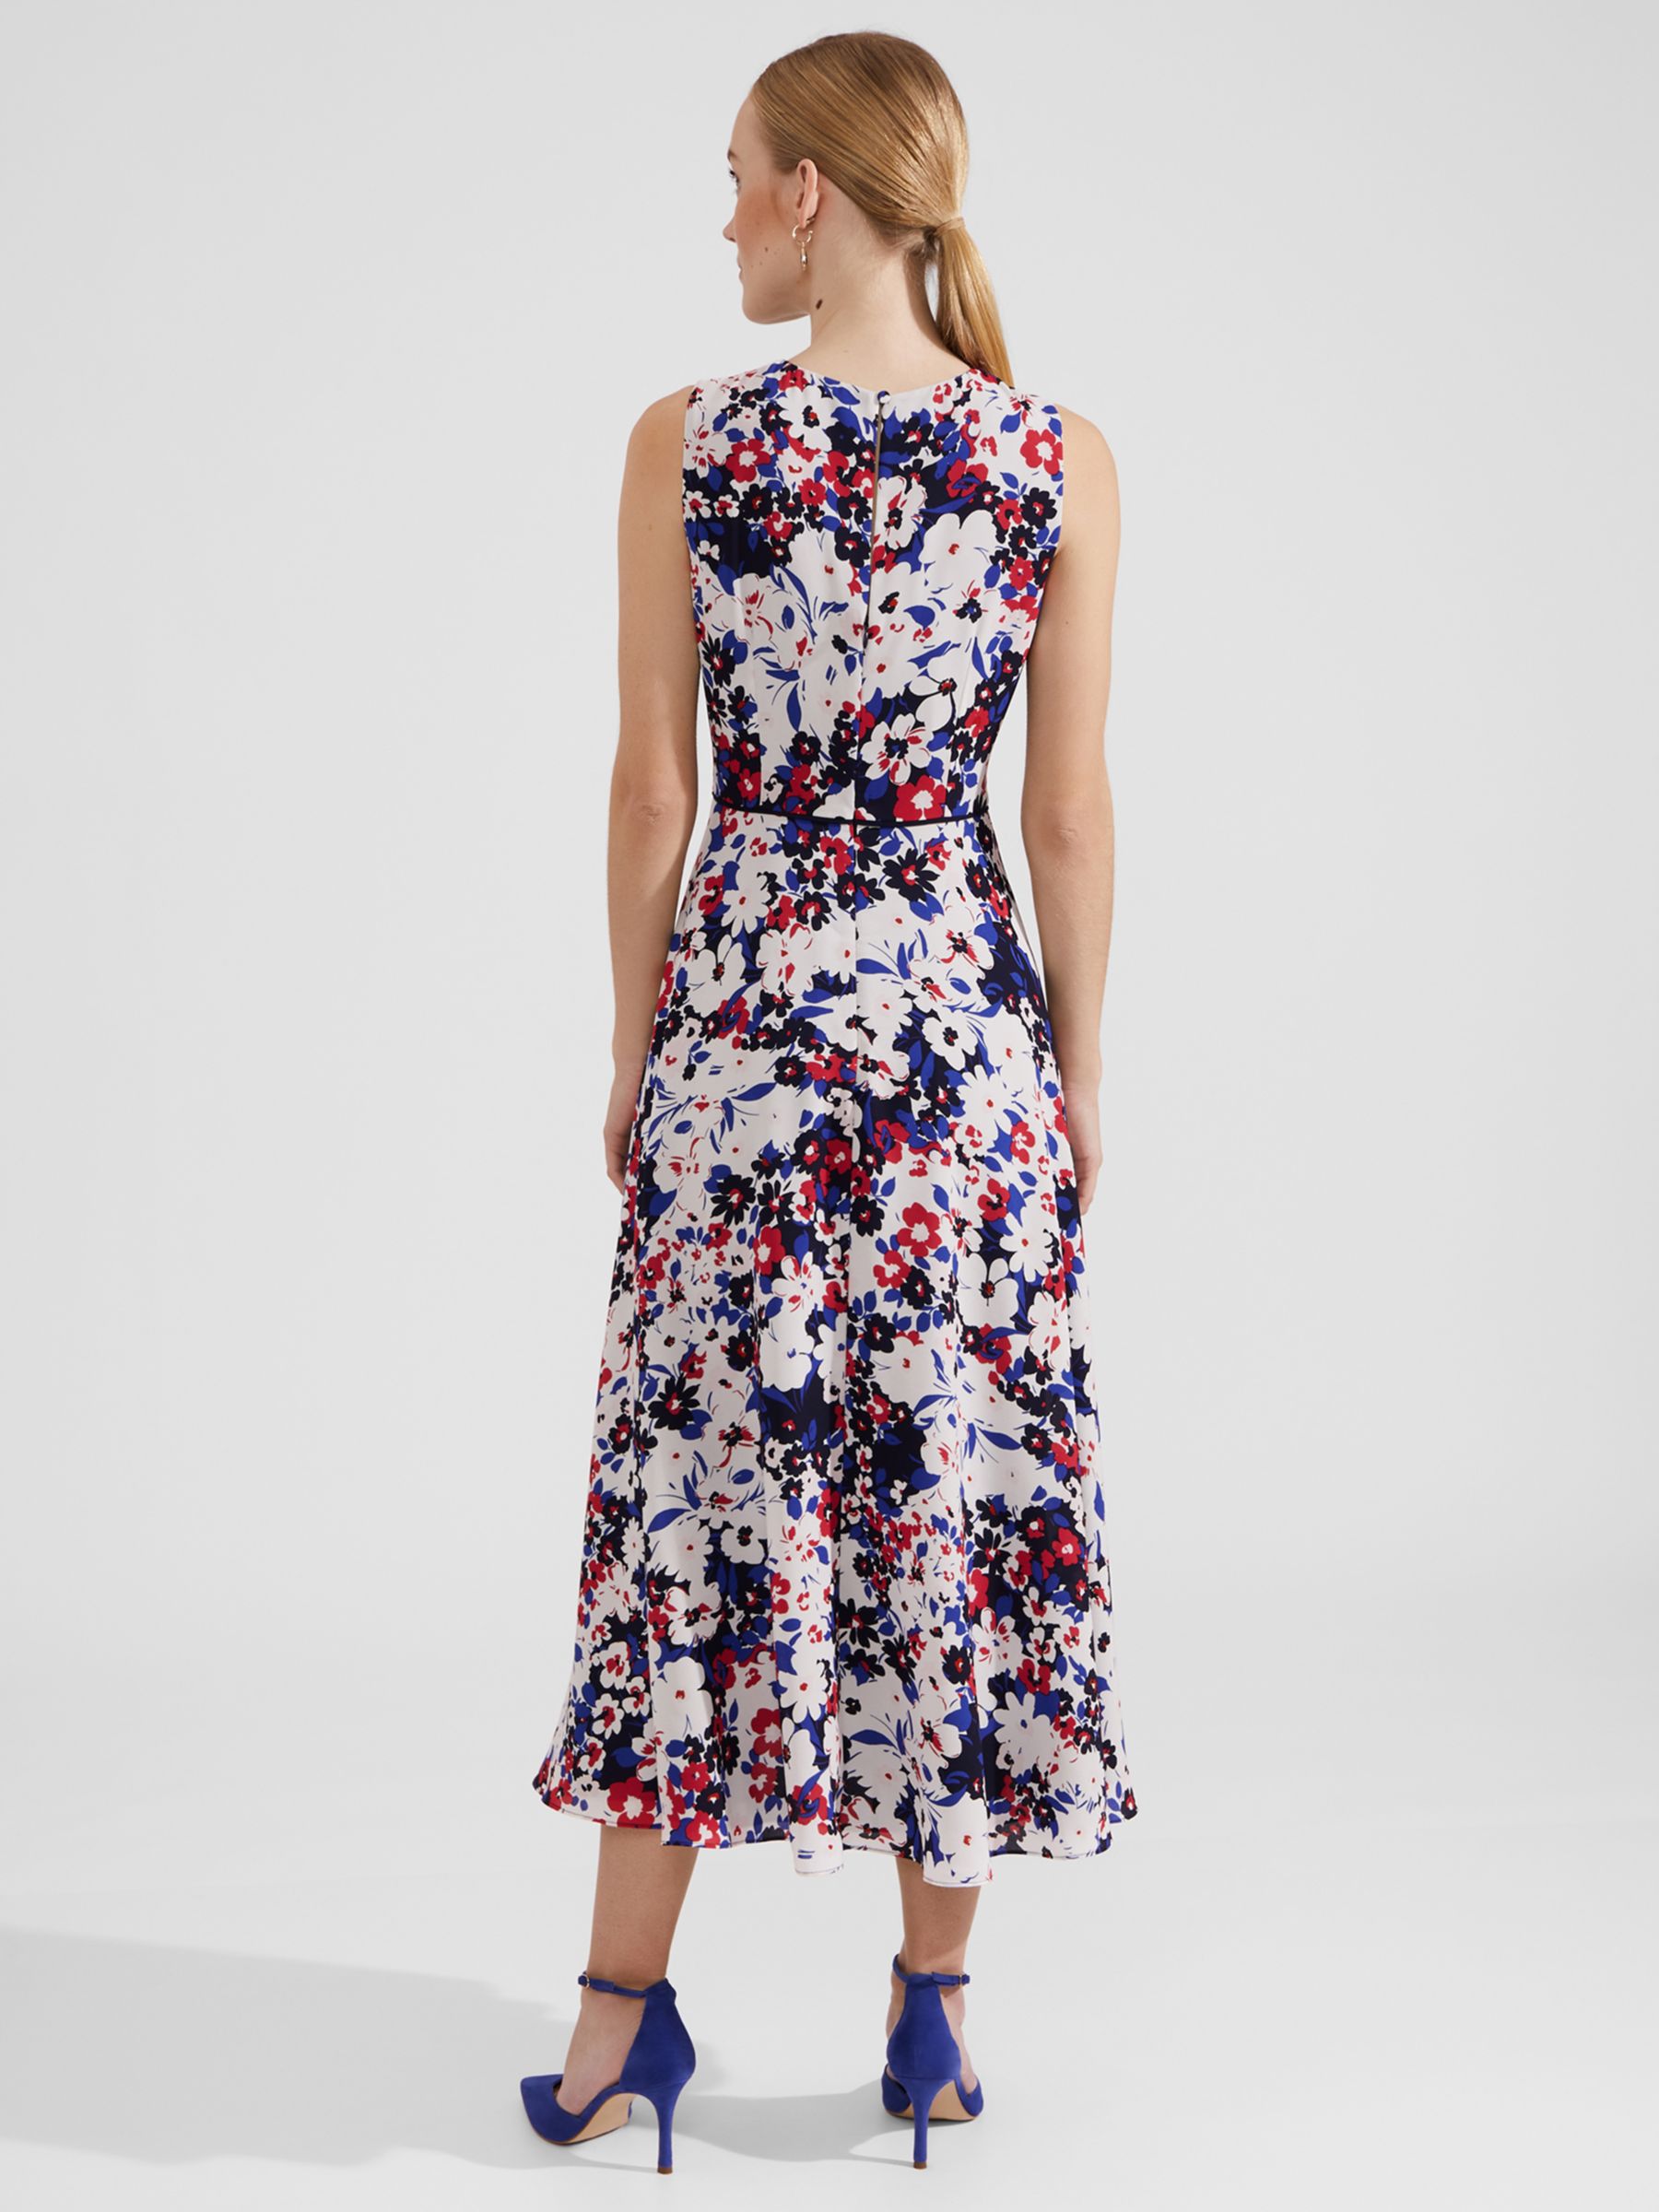 Hobbs Carly Floral Print Midi Dress, Navy/Multi, 20